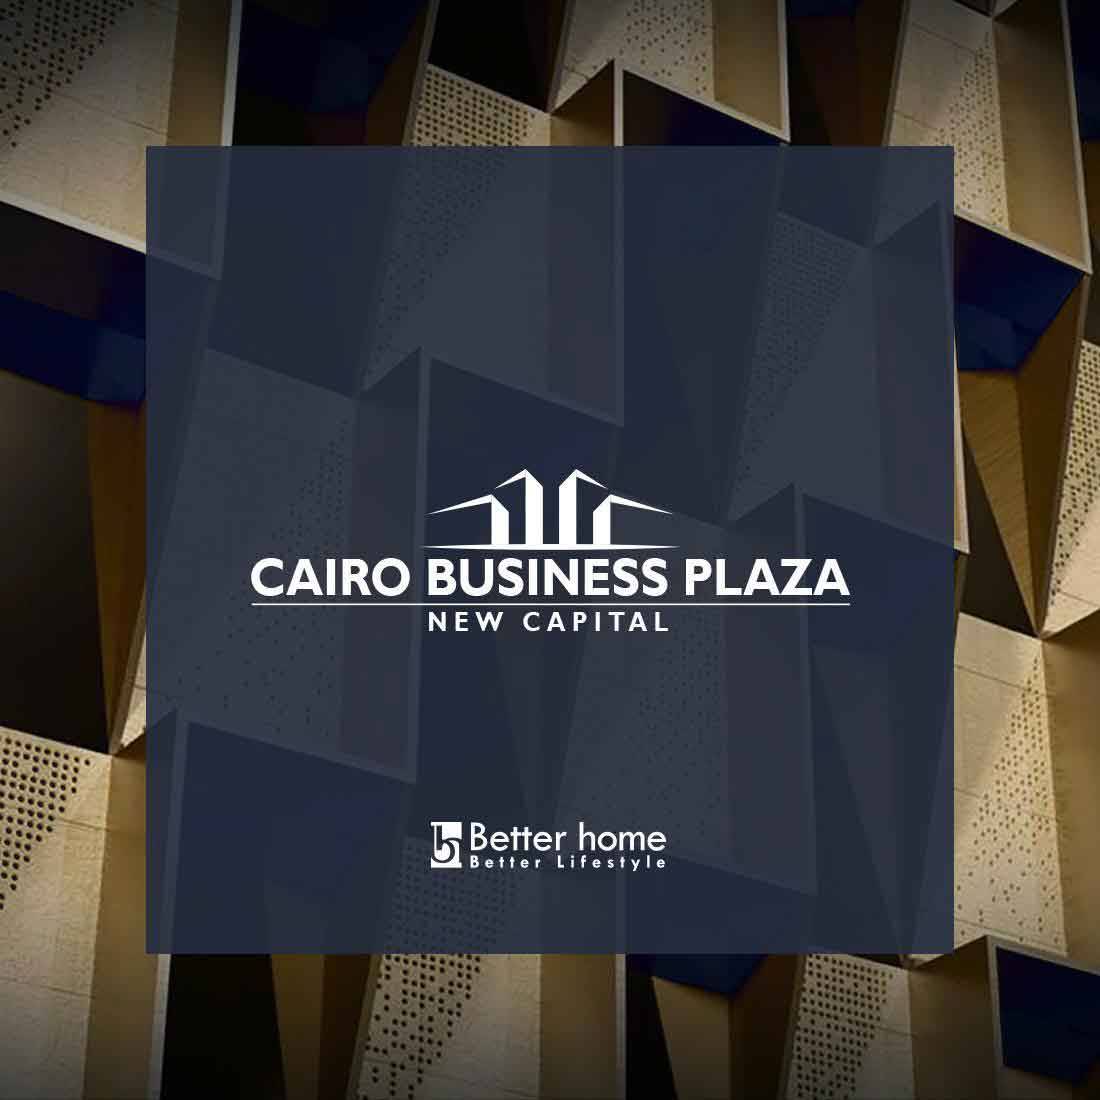 مول كايرو بزنس العاصمه الاداريه Cairo Business Plaza Mall - Cairo Business Plaza Mall new capital